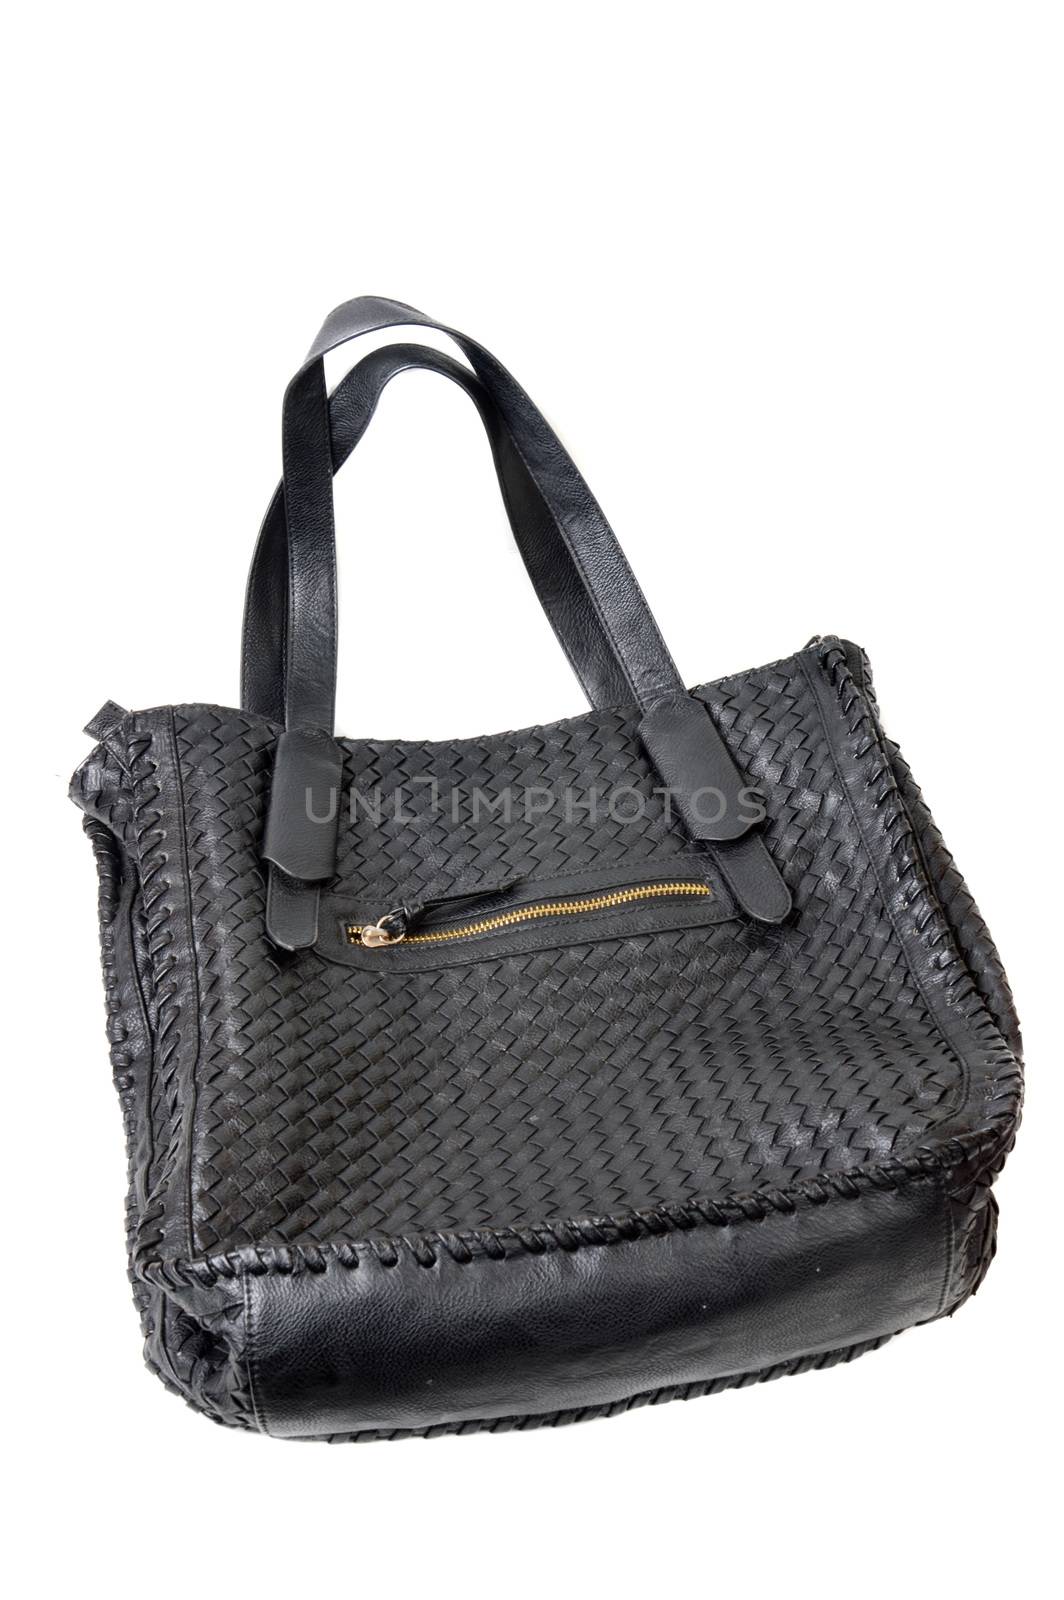 black handbag by antonihalim